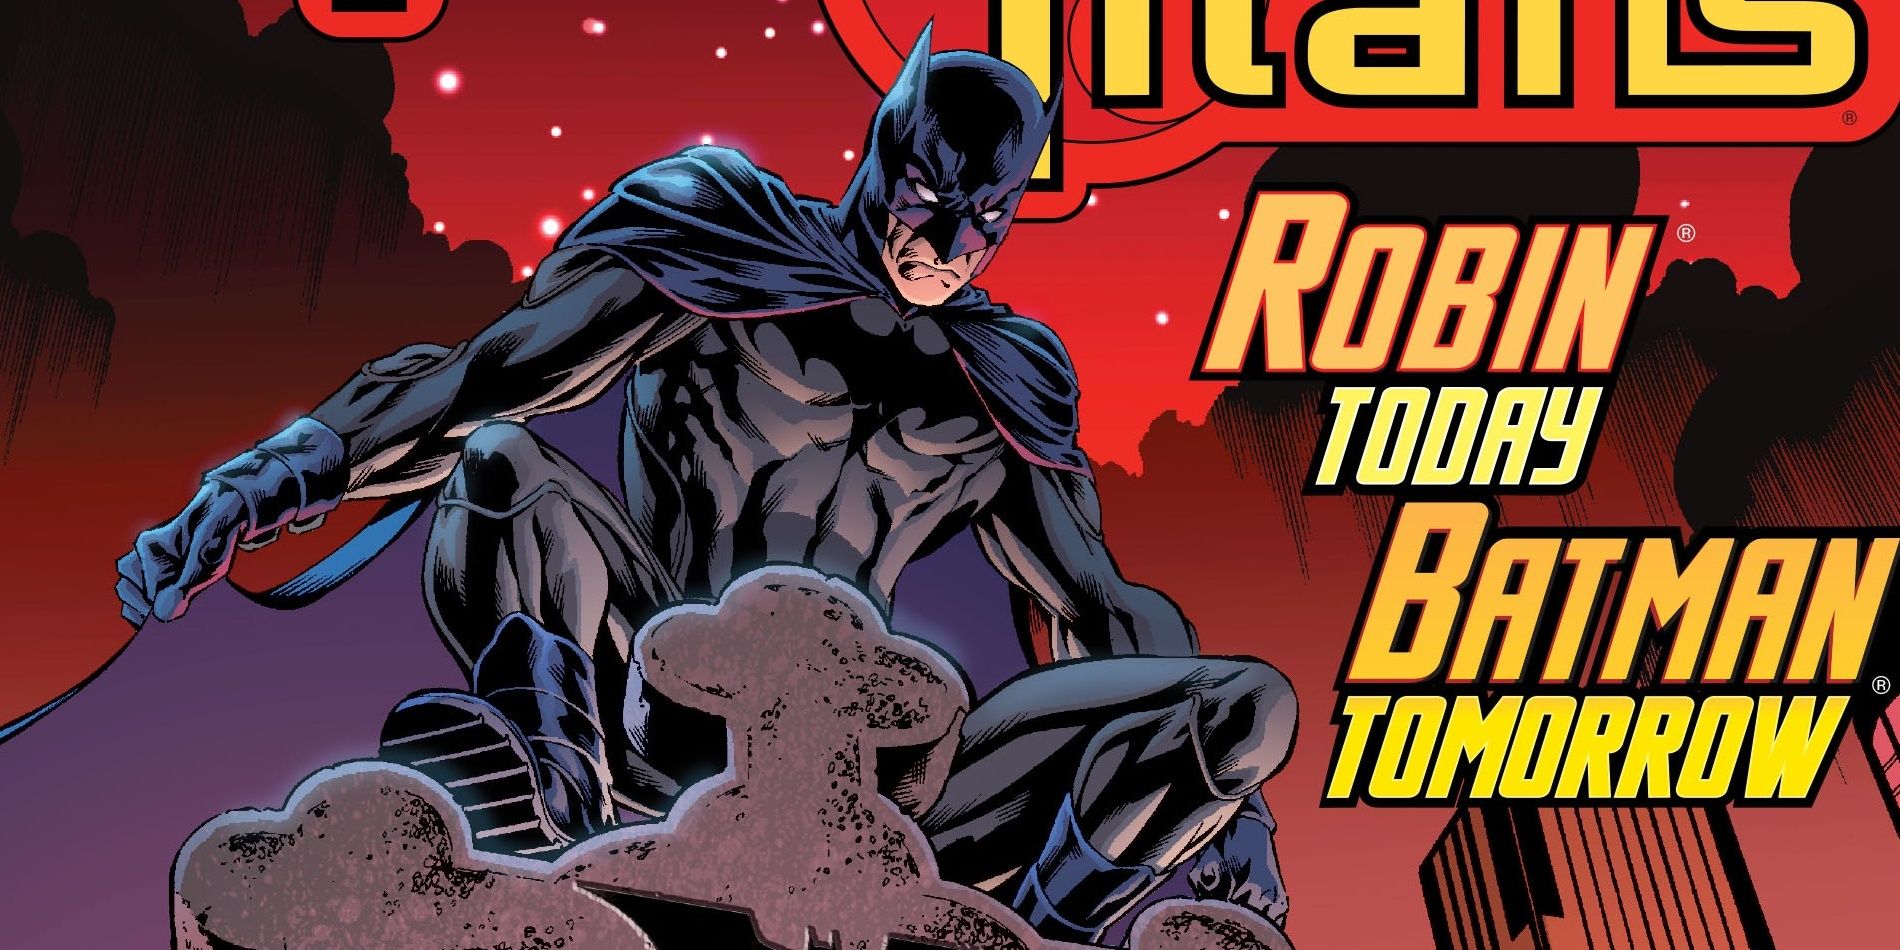 Tim Drake As Batman from DC Comics Teen Titans: Titans Tomorrow